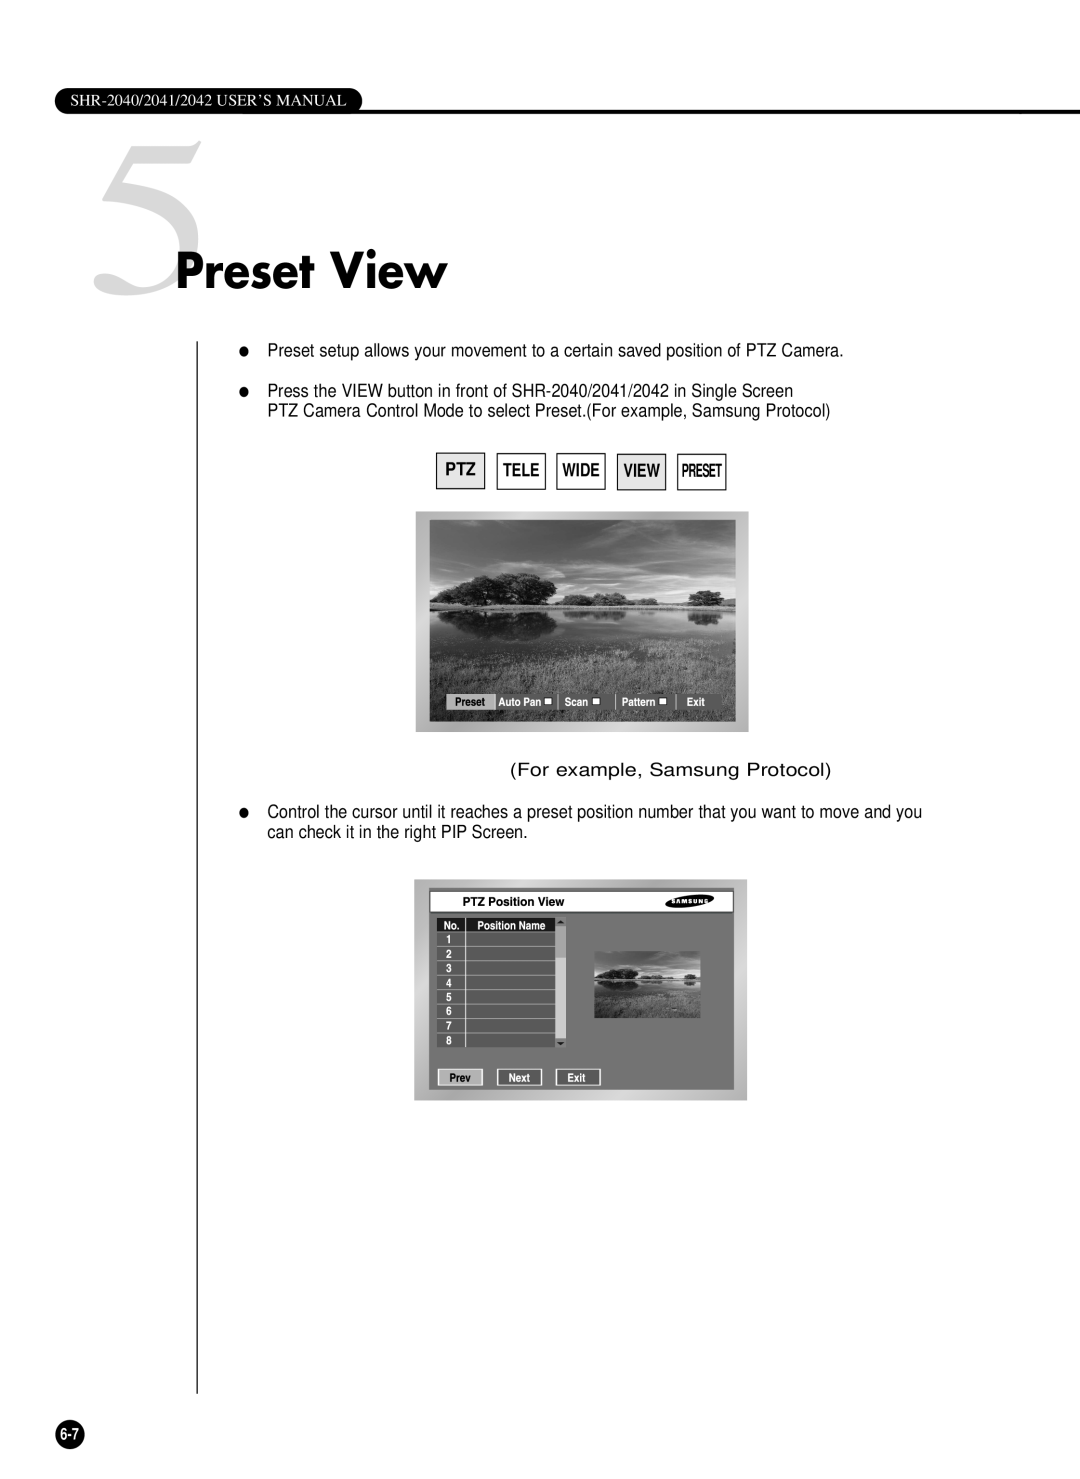 Samsung SHR-2042P, SHR-2040P/GAR, SHR-2040PX, SHR-2040P/XEC manual 5Preset View, Tele Wide View Preset 